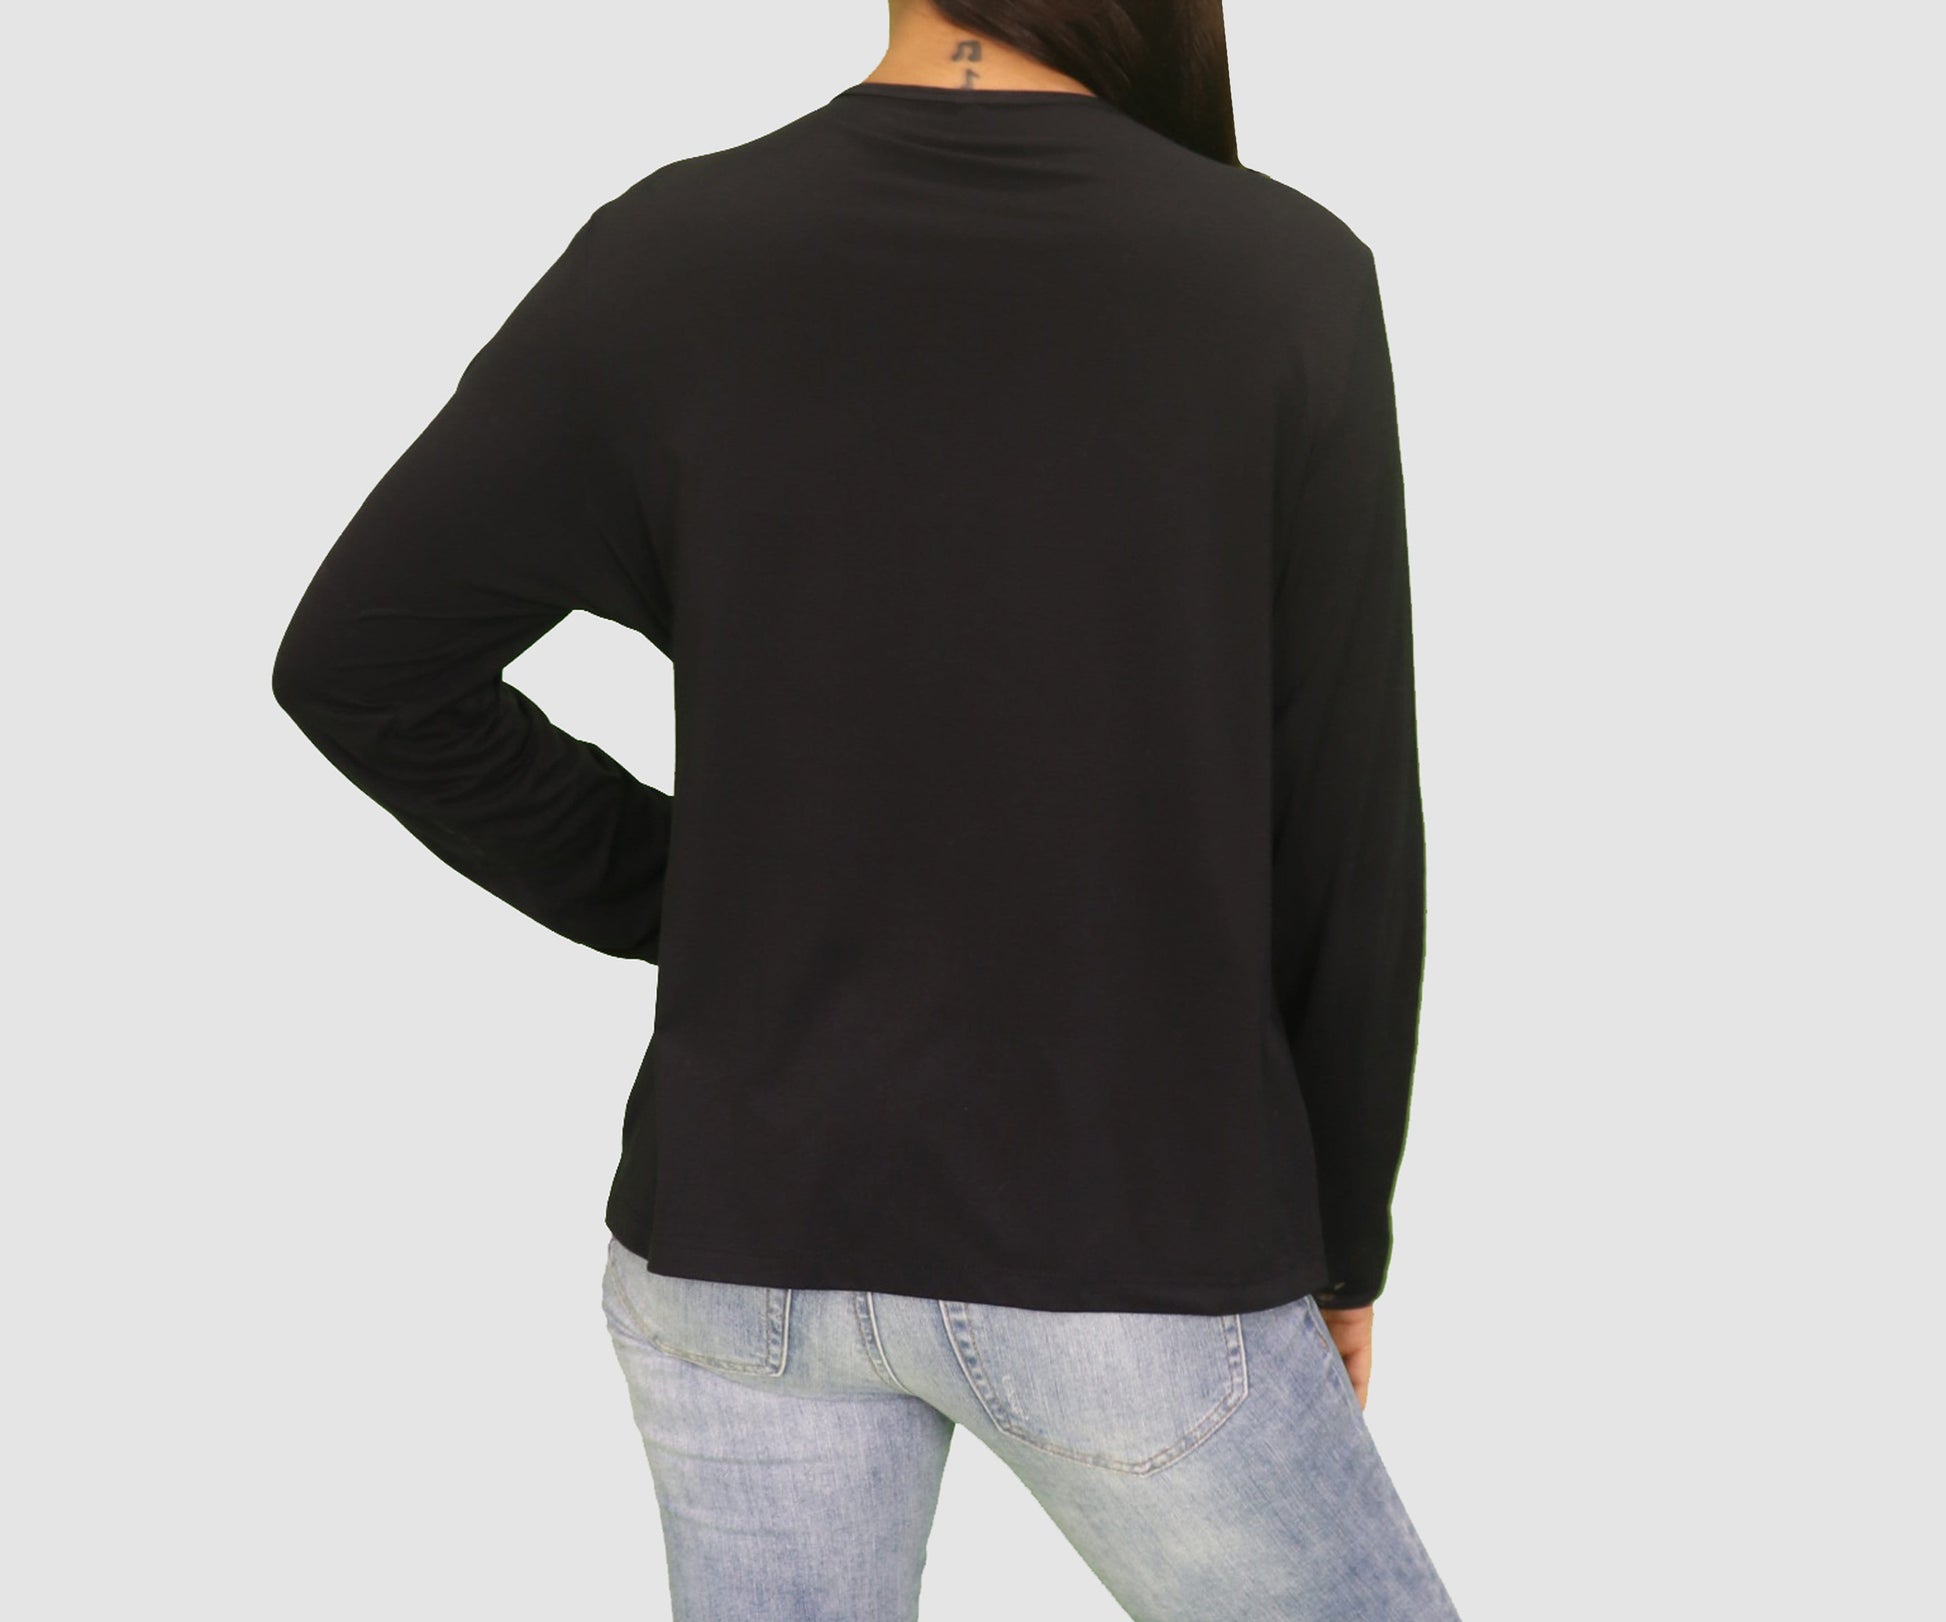 BRANDS & BEYOND Womens Tops Petite X-Large / Black Long Sleeve Top